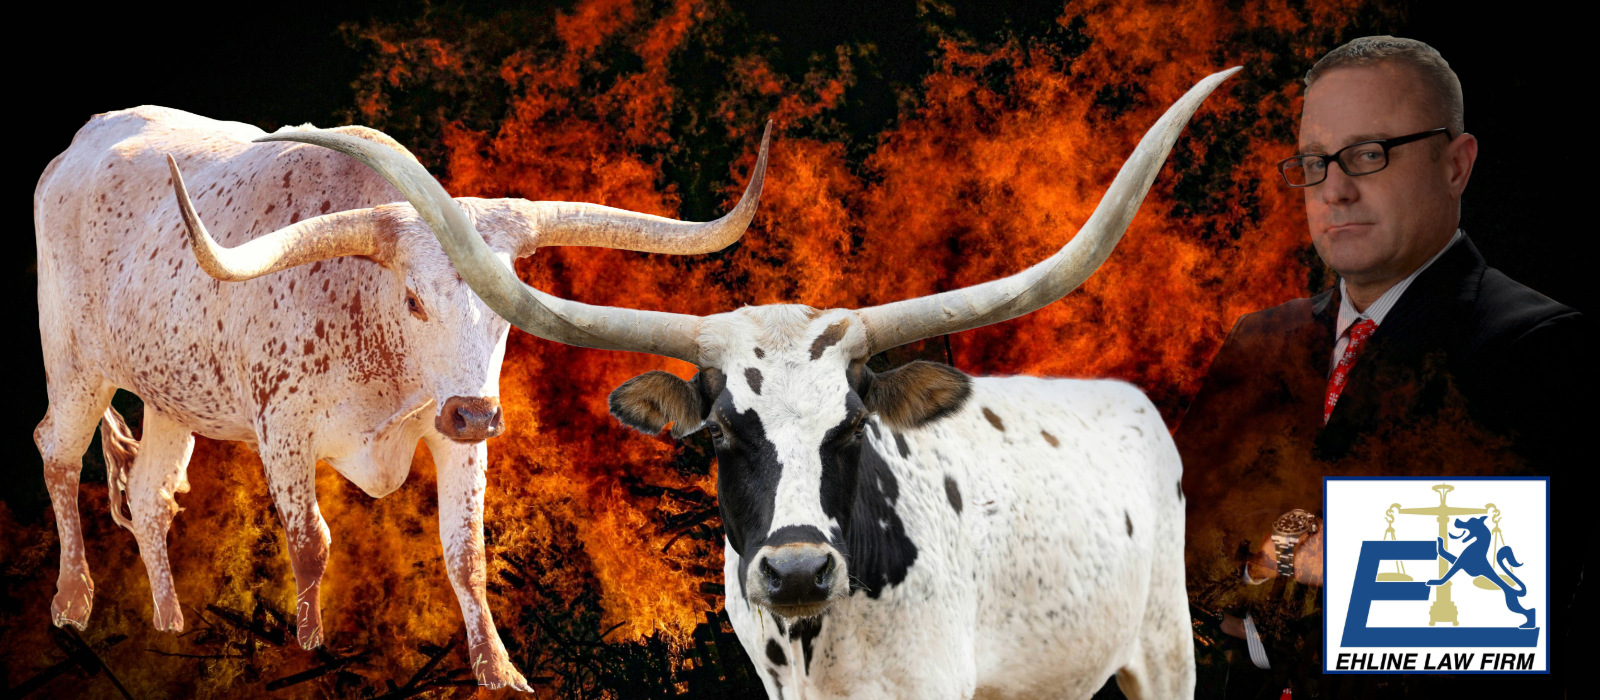 Texas Cattle Wildfire Attorneys